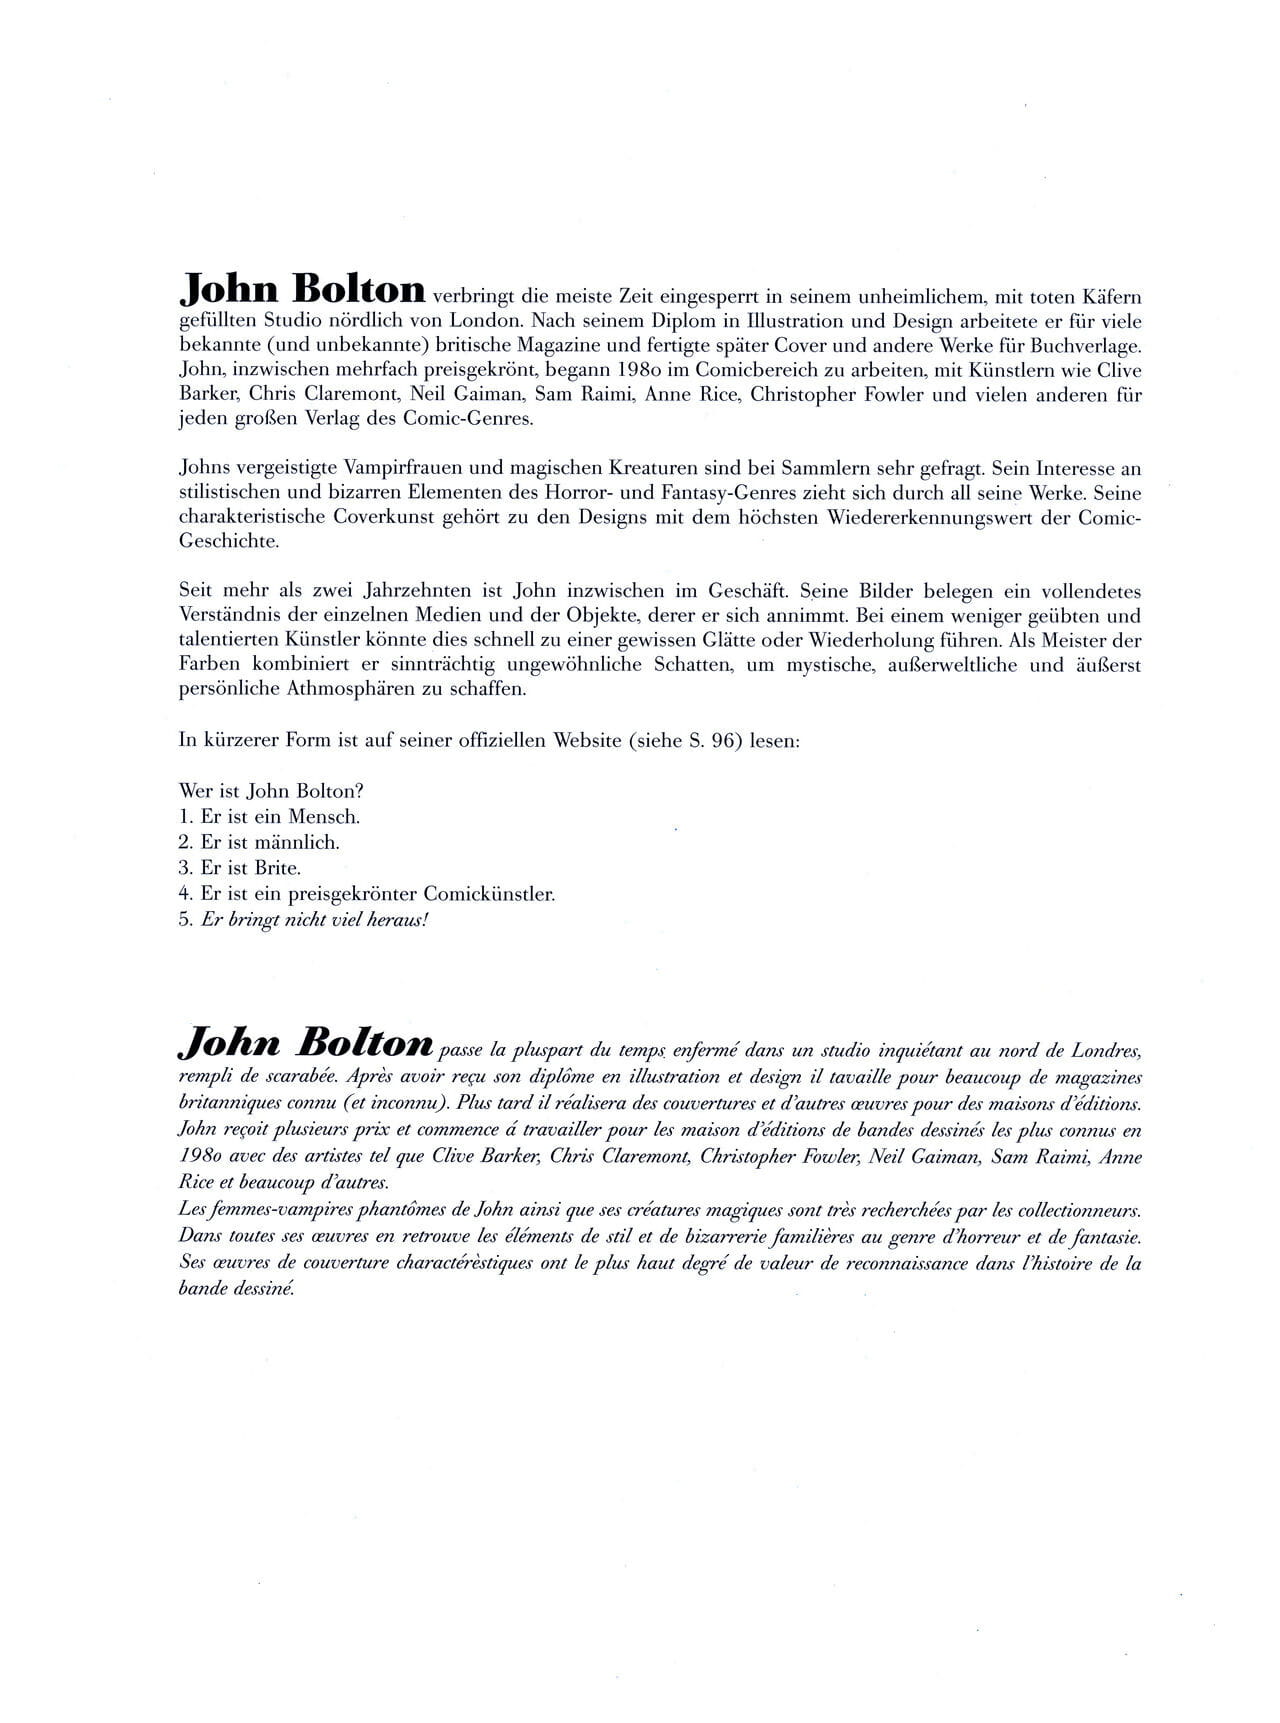 Art Fantastix #06 - The Art of John Bolton page 1